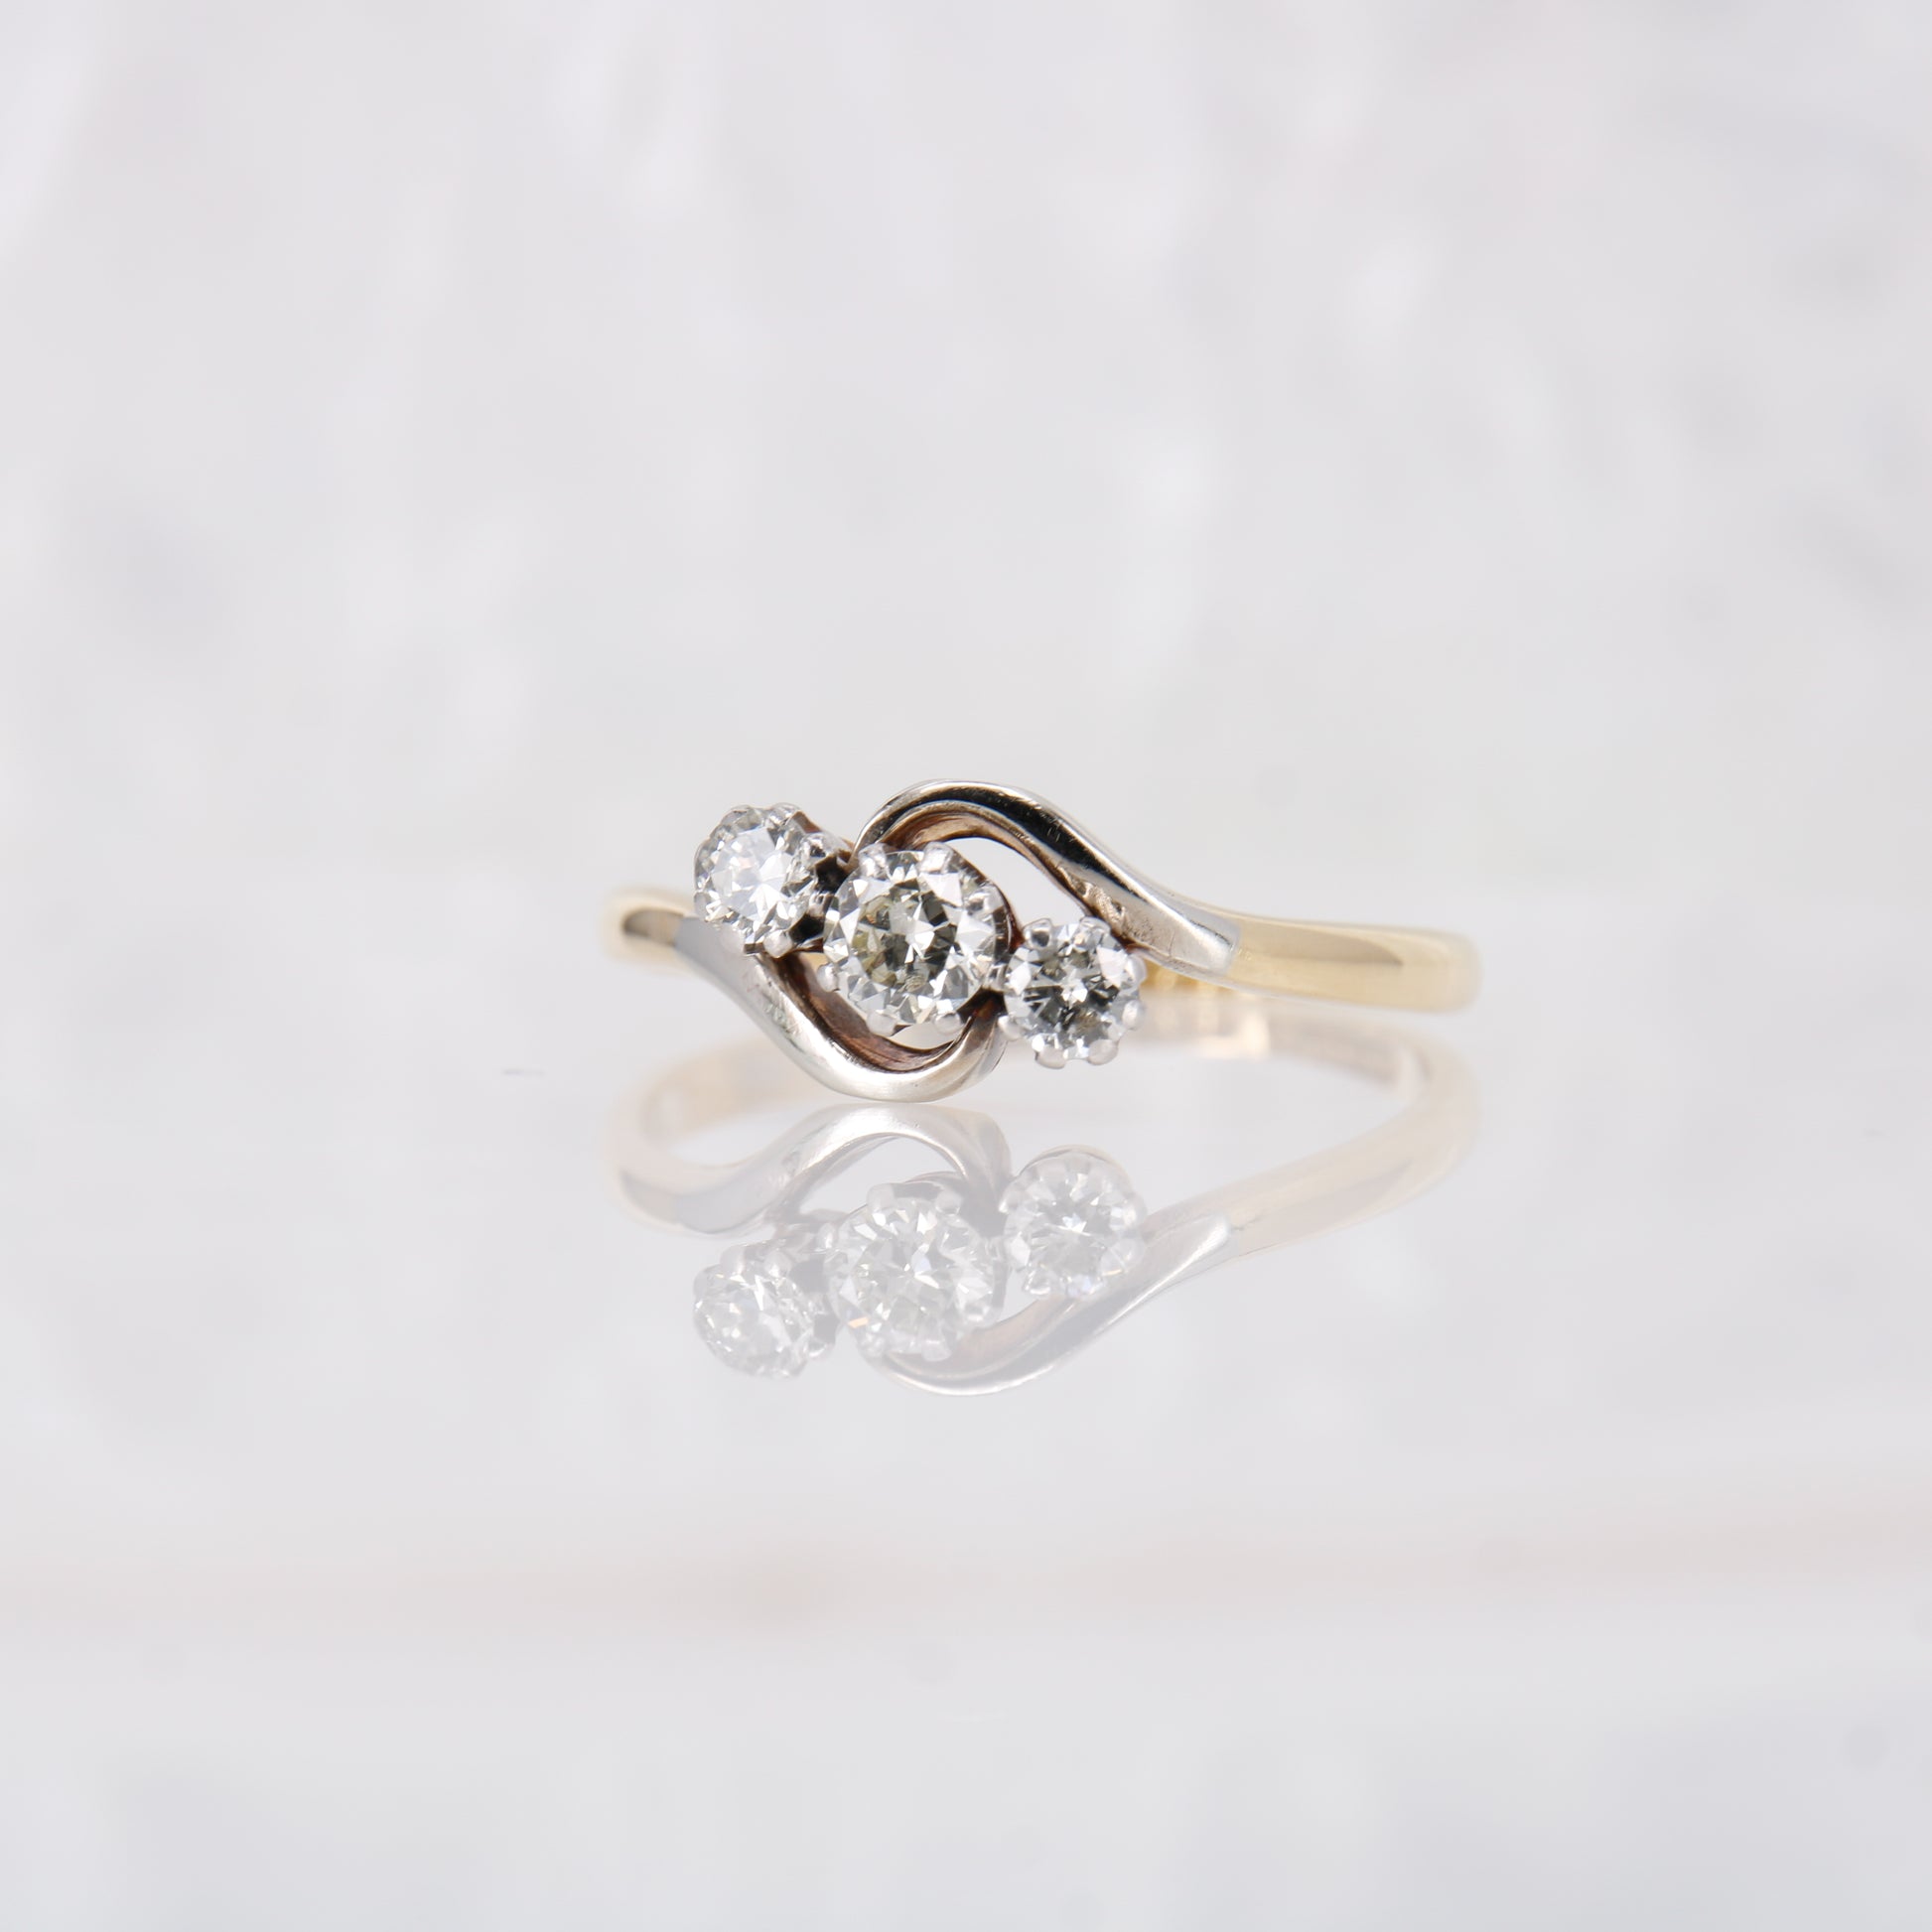 Vintage Circa 1930's Diamond Trilogy Ring set in 18ct Yellow Gold and Platinum. Secondhand Diamond Trilogy Ring.